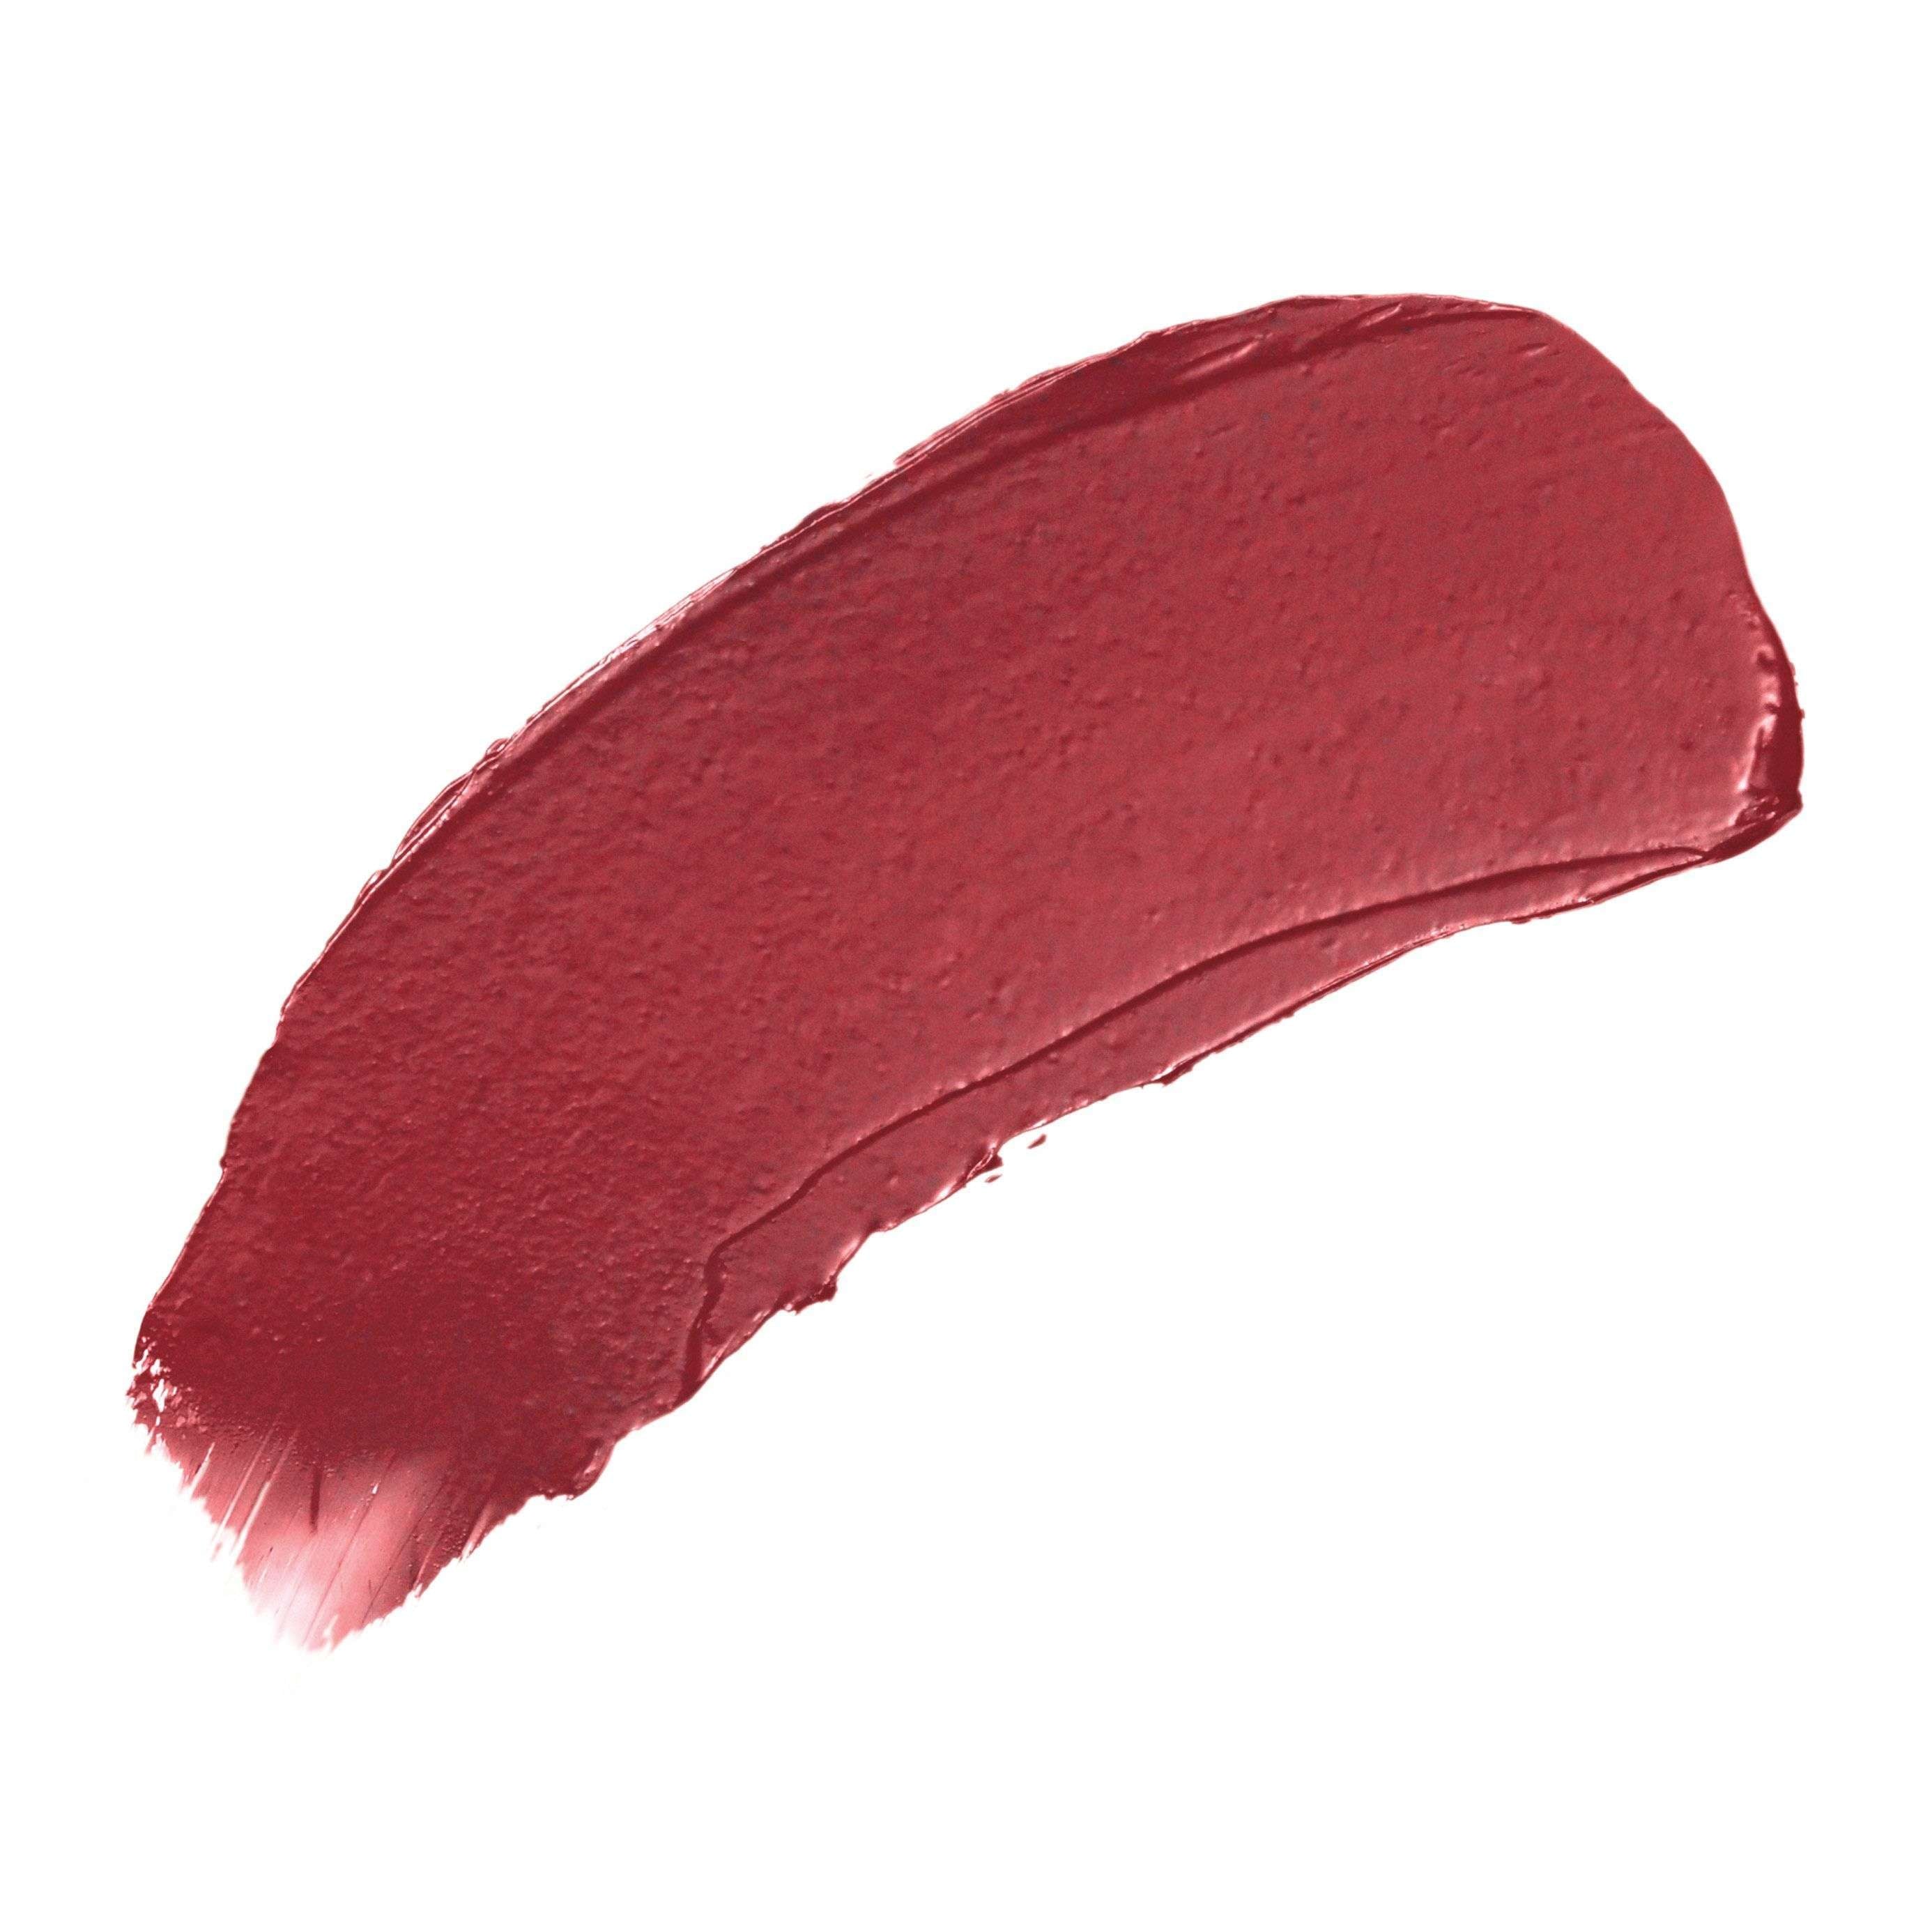 Jane Iredale Triple Luxe Long Lasting Naturally Moist Lipstick™, Megan Triple Luxe Lipstick